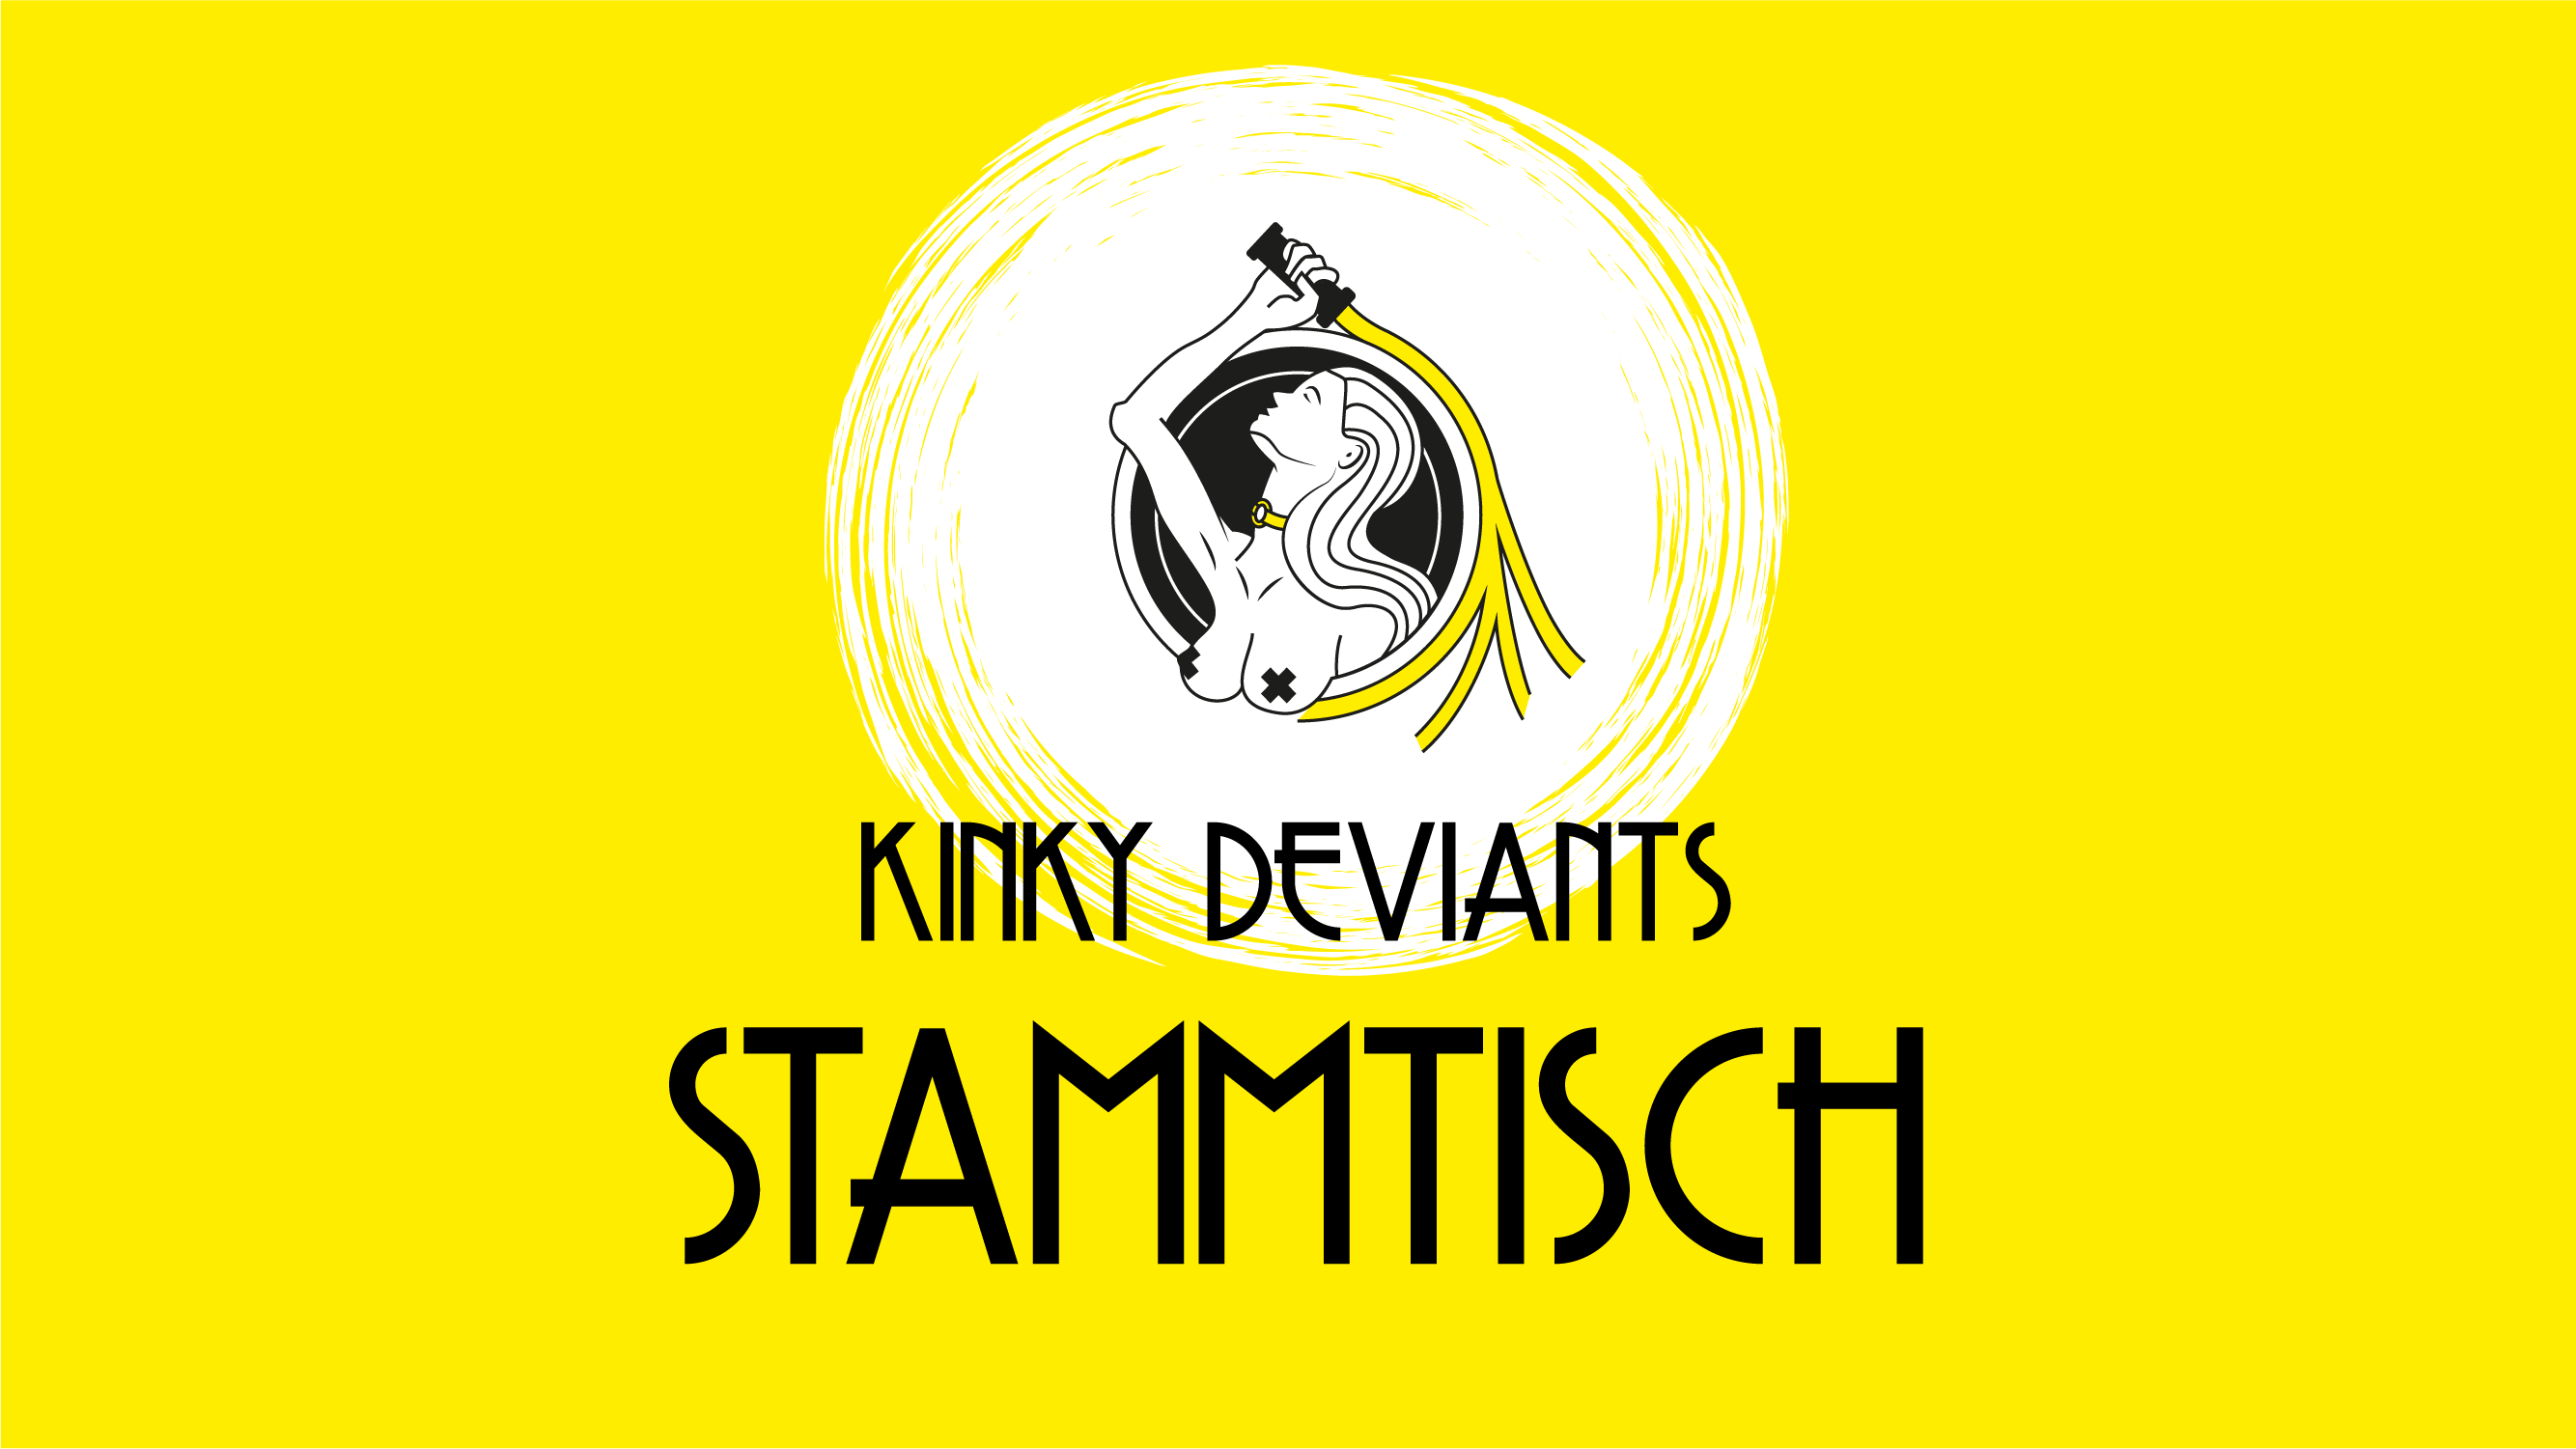 KD: Kinky Deviants Stammtisch Oktober - „3 Jahre Kinky Deviants“